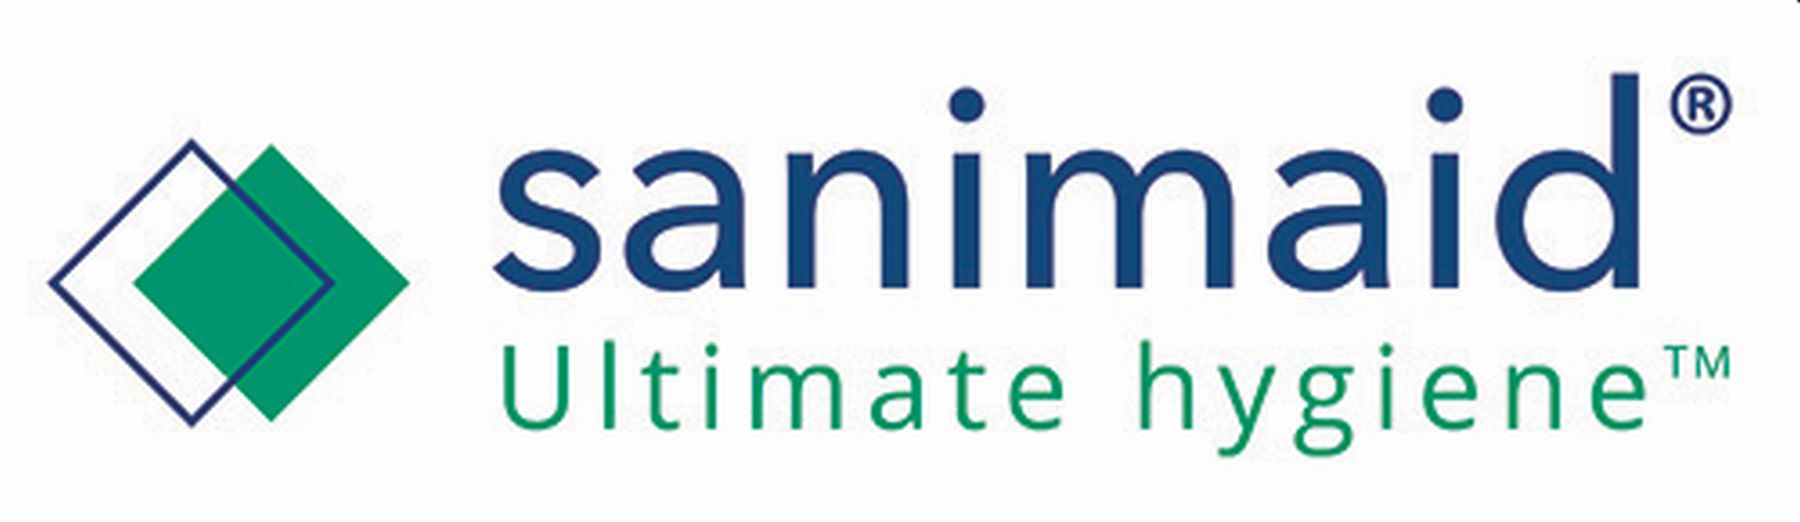 Sanimaid Logo Skitser 3